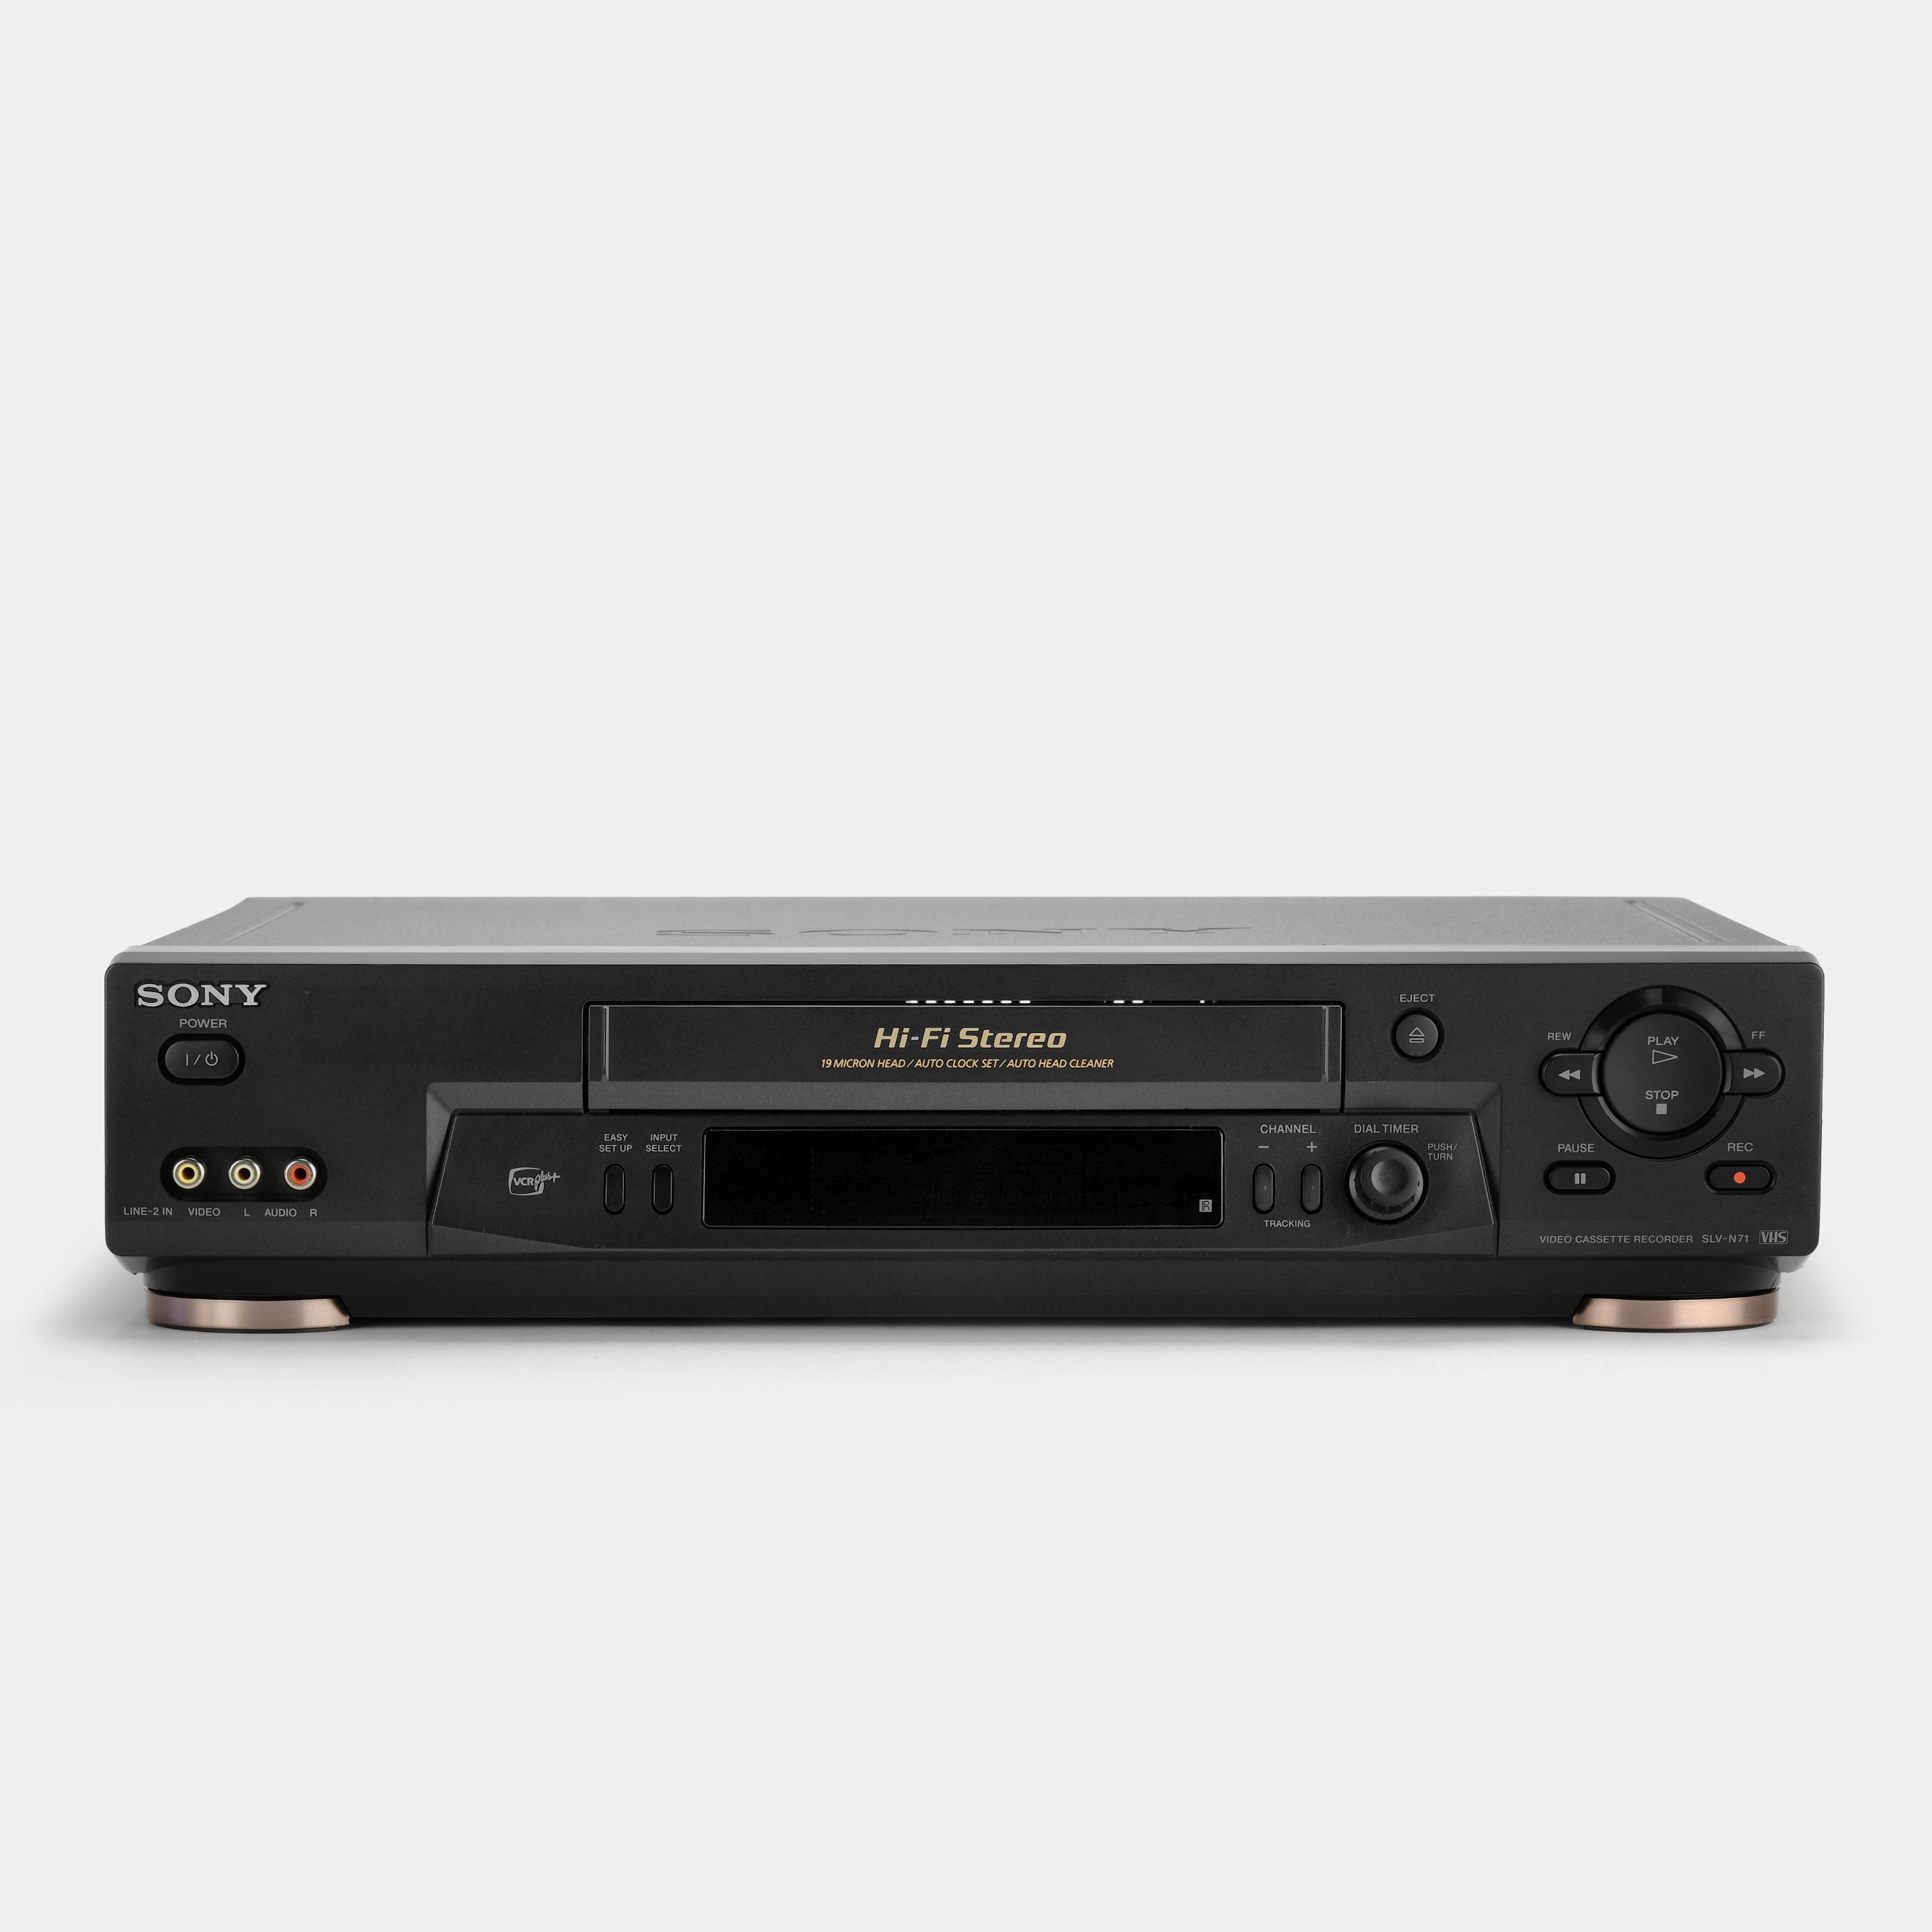 Sony SLV-N71 VCR VHS Player